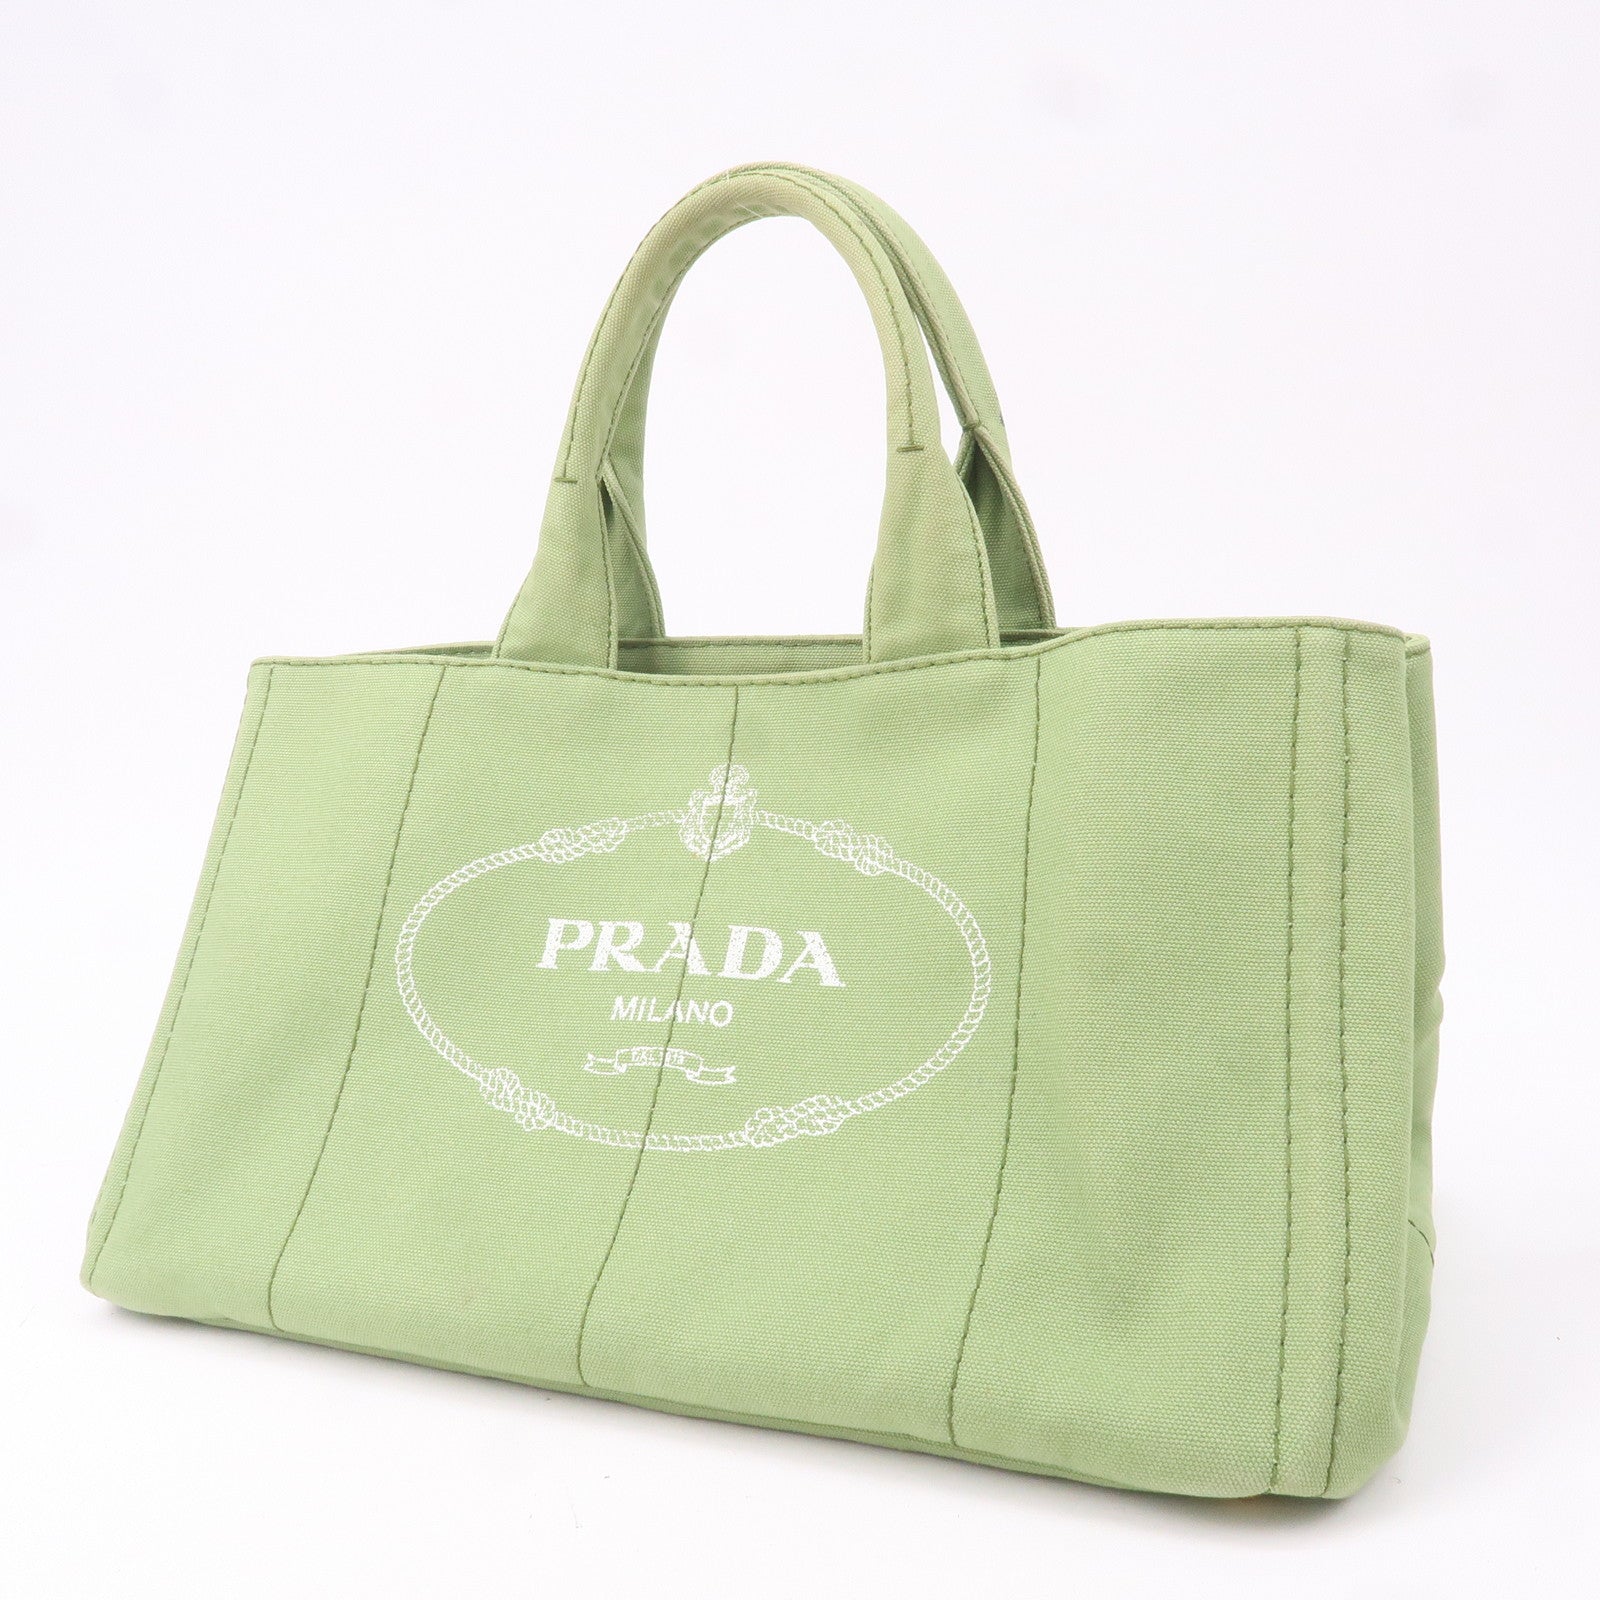 PRADA-Canapa-Canvas-Tote-Bag-Hand-Bag-Green-B1877B